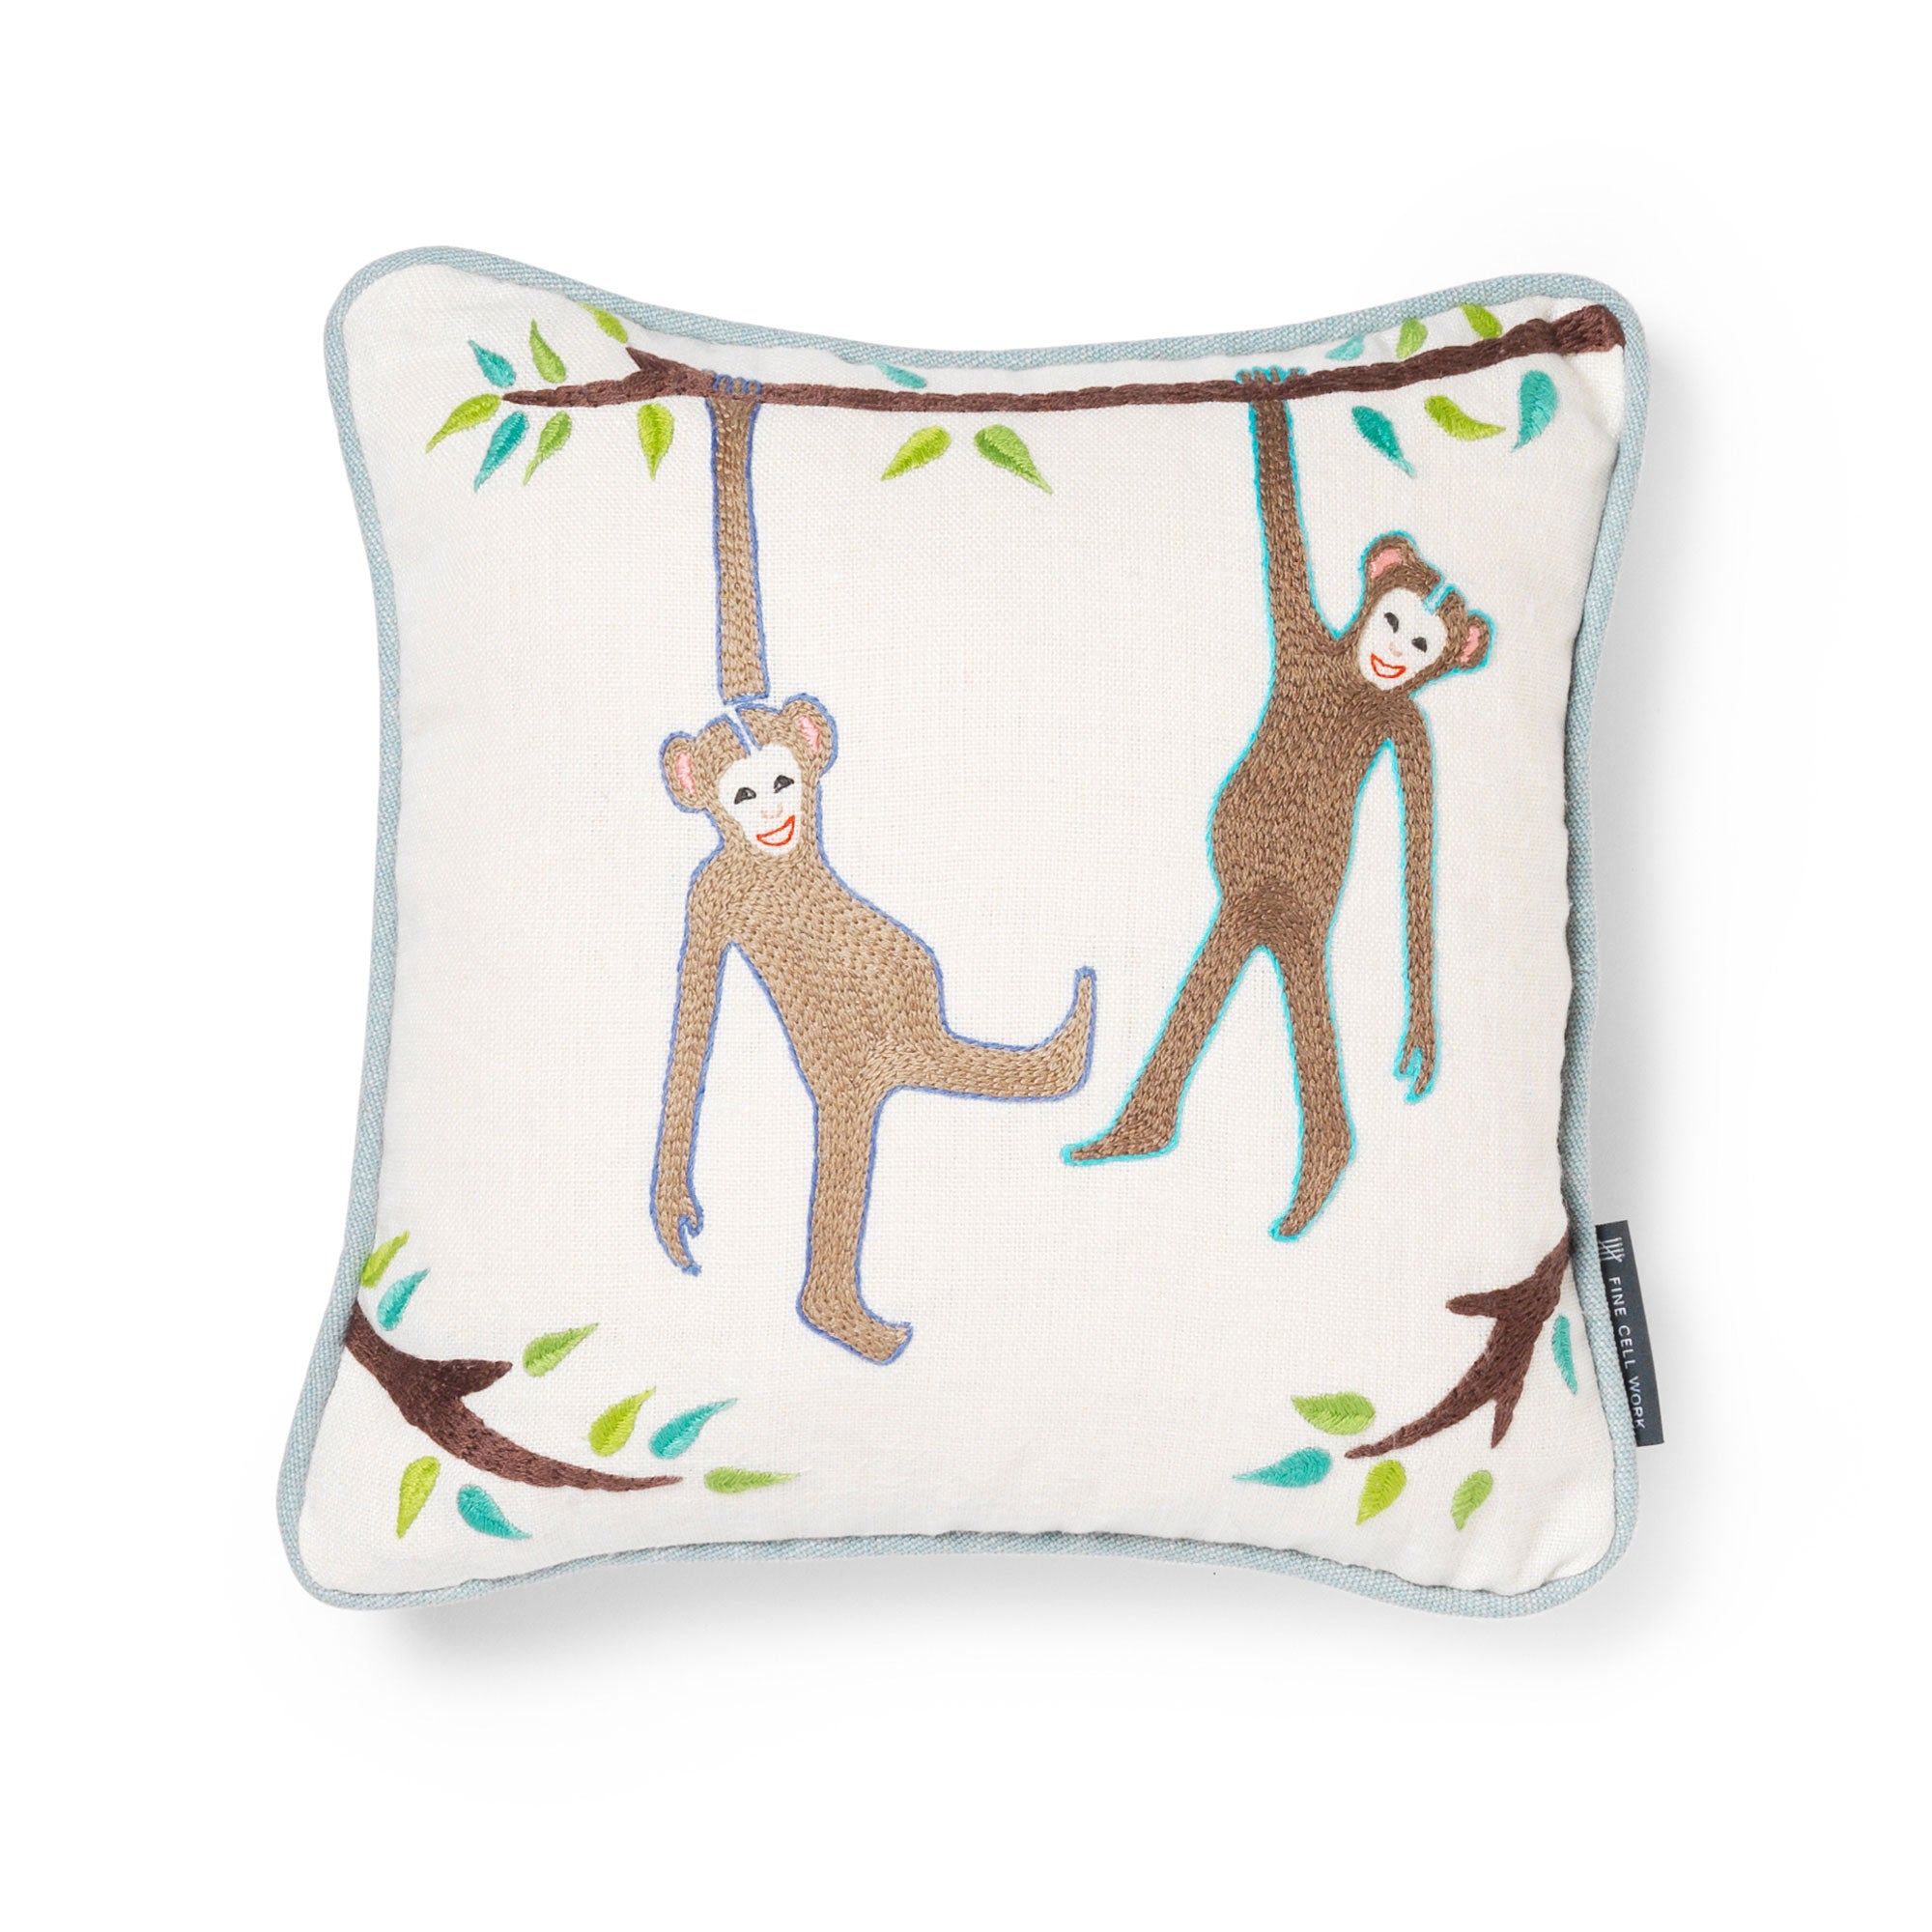 Noah's Ark Naughty Monkeys Cushion Marion Rhoades for Fine Cell Work